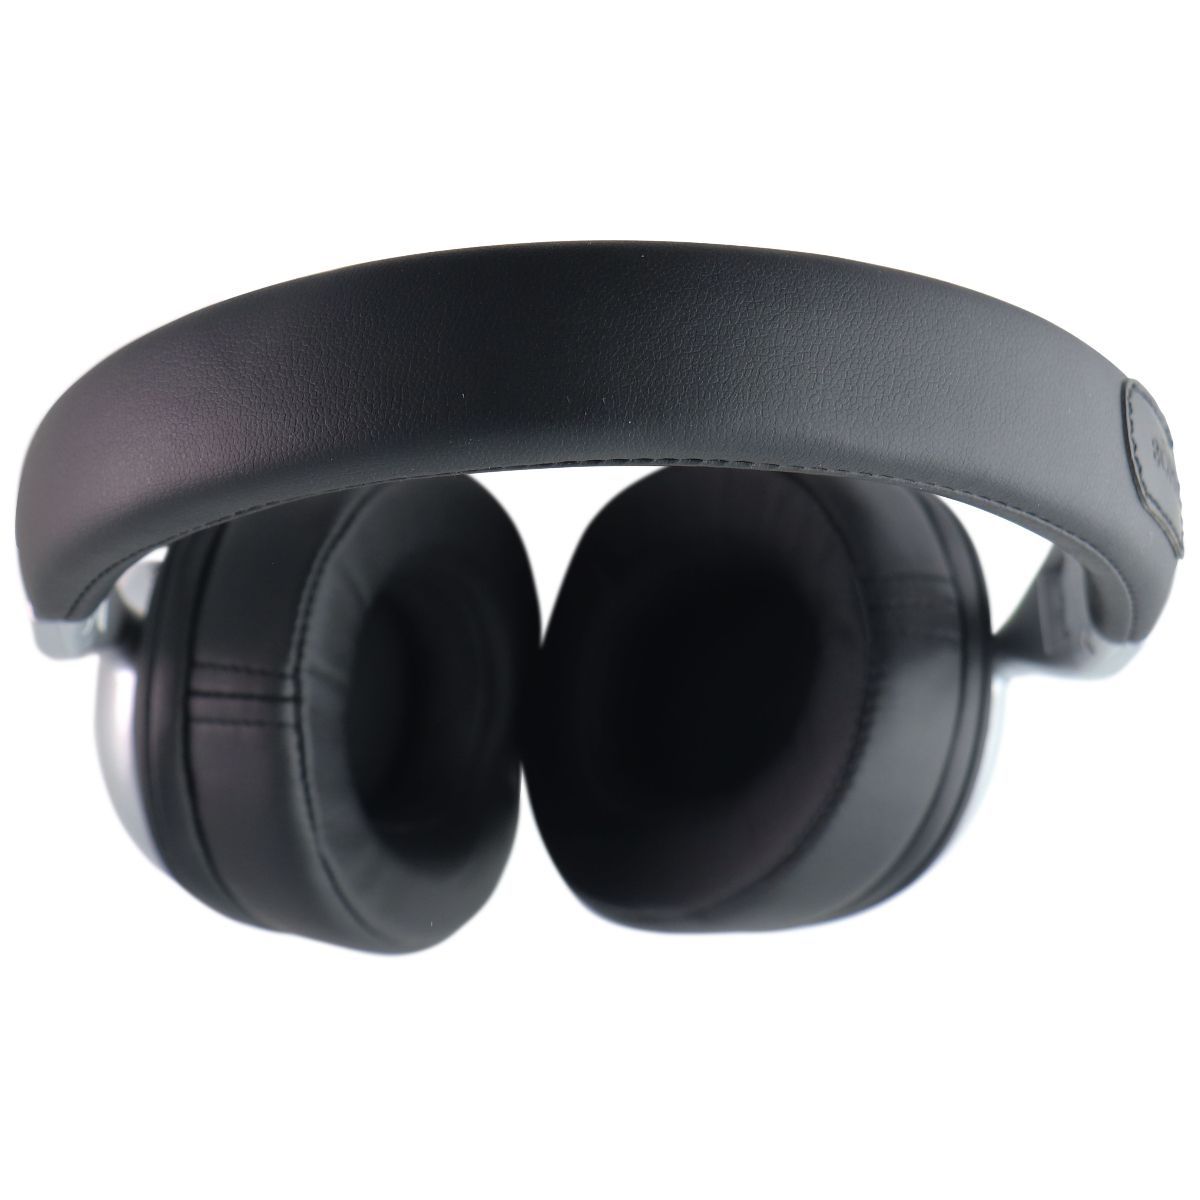 BOHM B76 Wireless Bluetooth Over-Ear Noise Canceling Headphones - Black / Silver Portable Audio - Headphones BOHM    - Simple Cell Bulk Wholesale Pricing - USA Seller